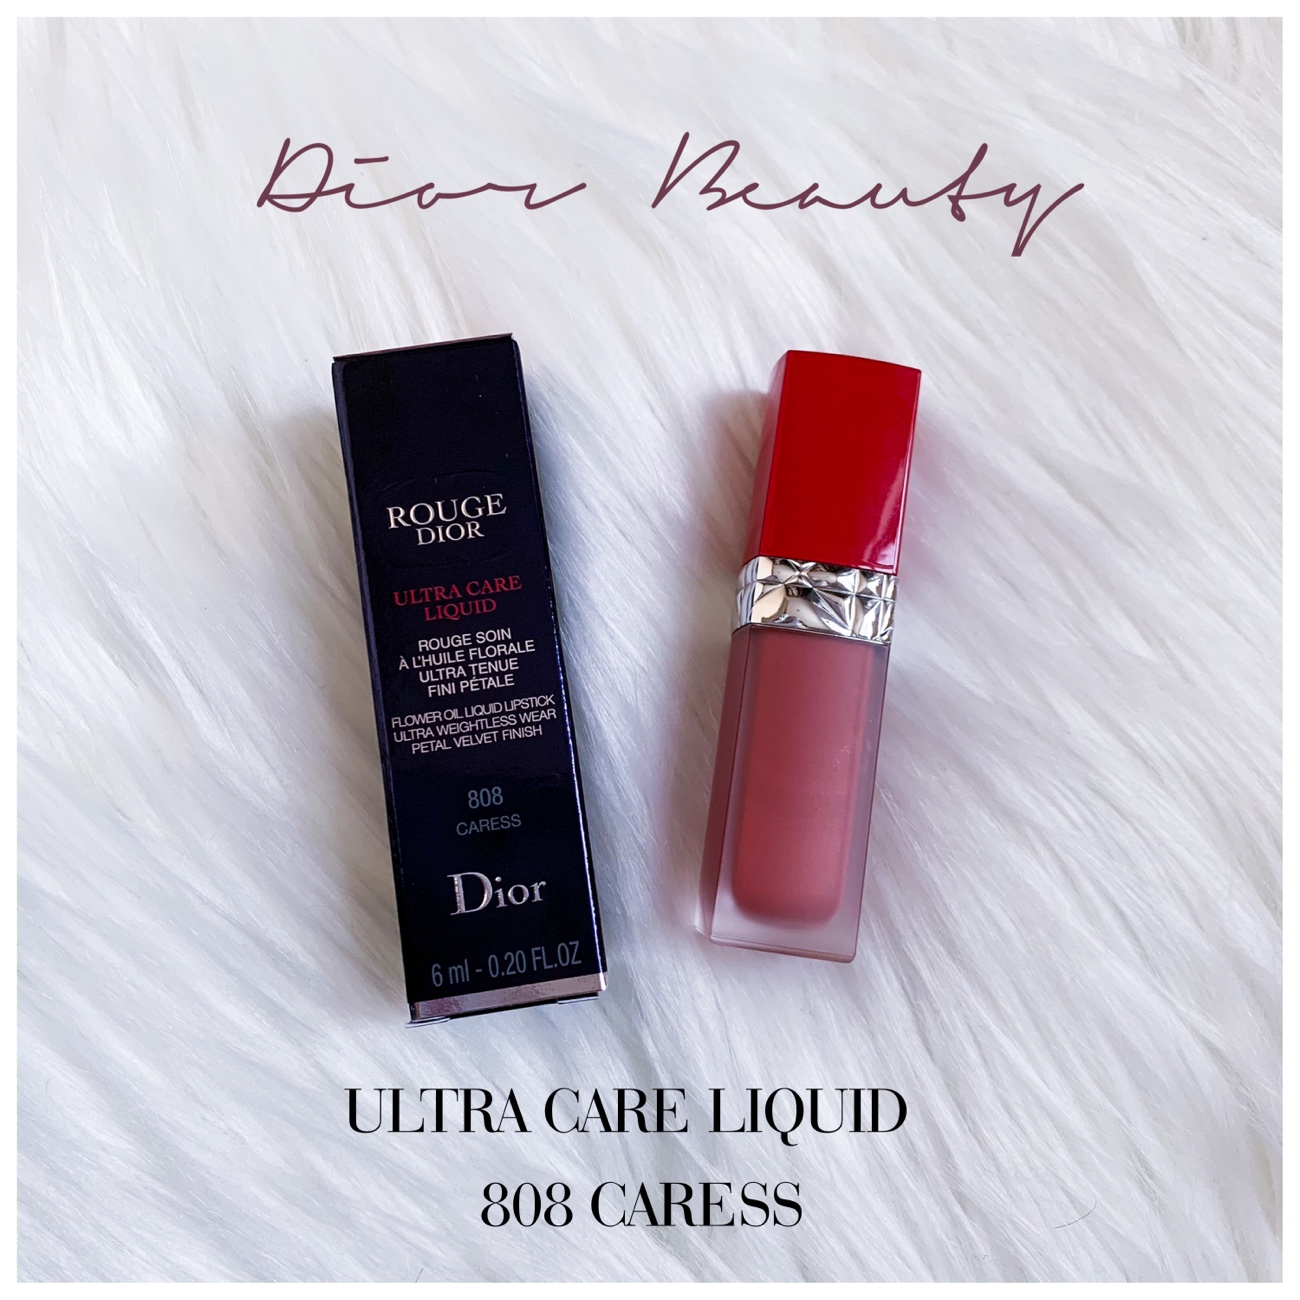 dior lipstick 808